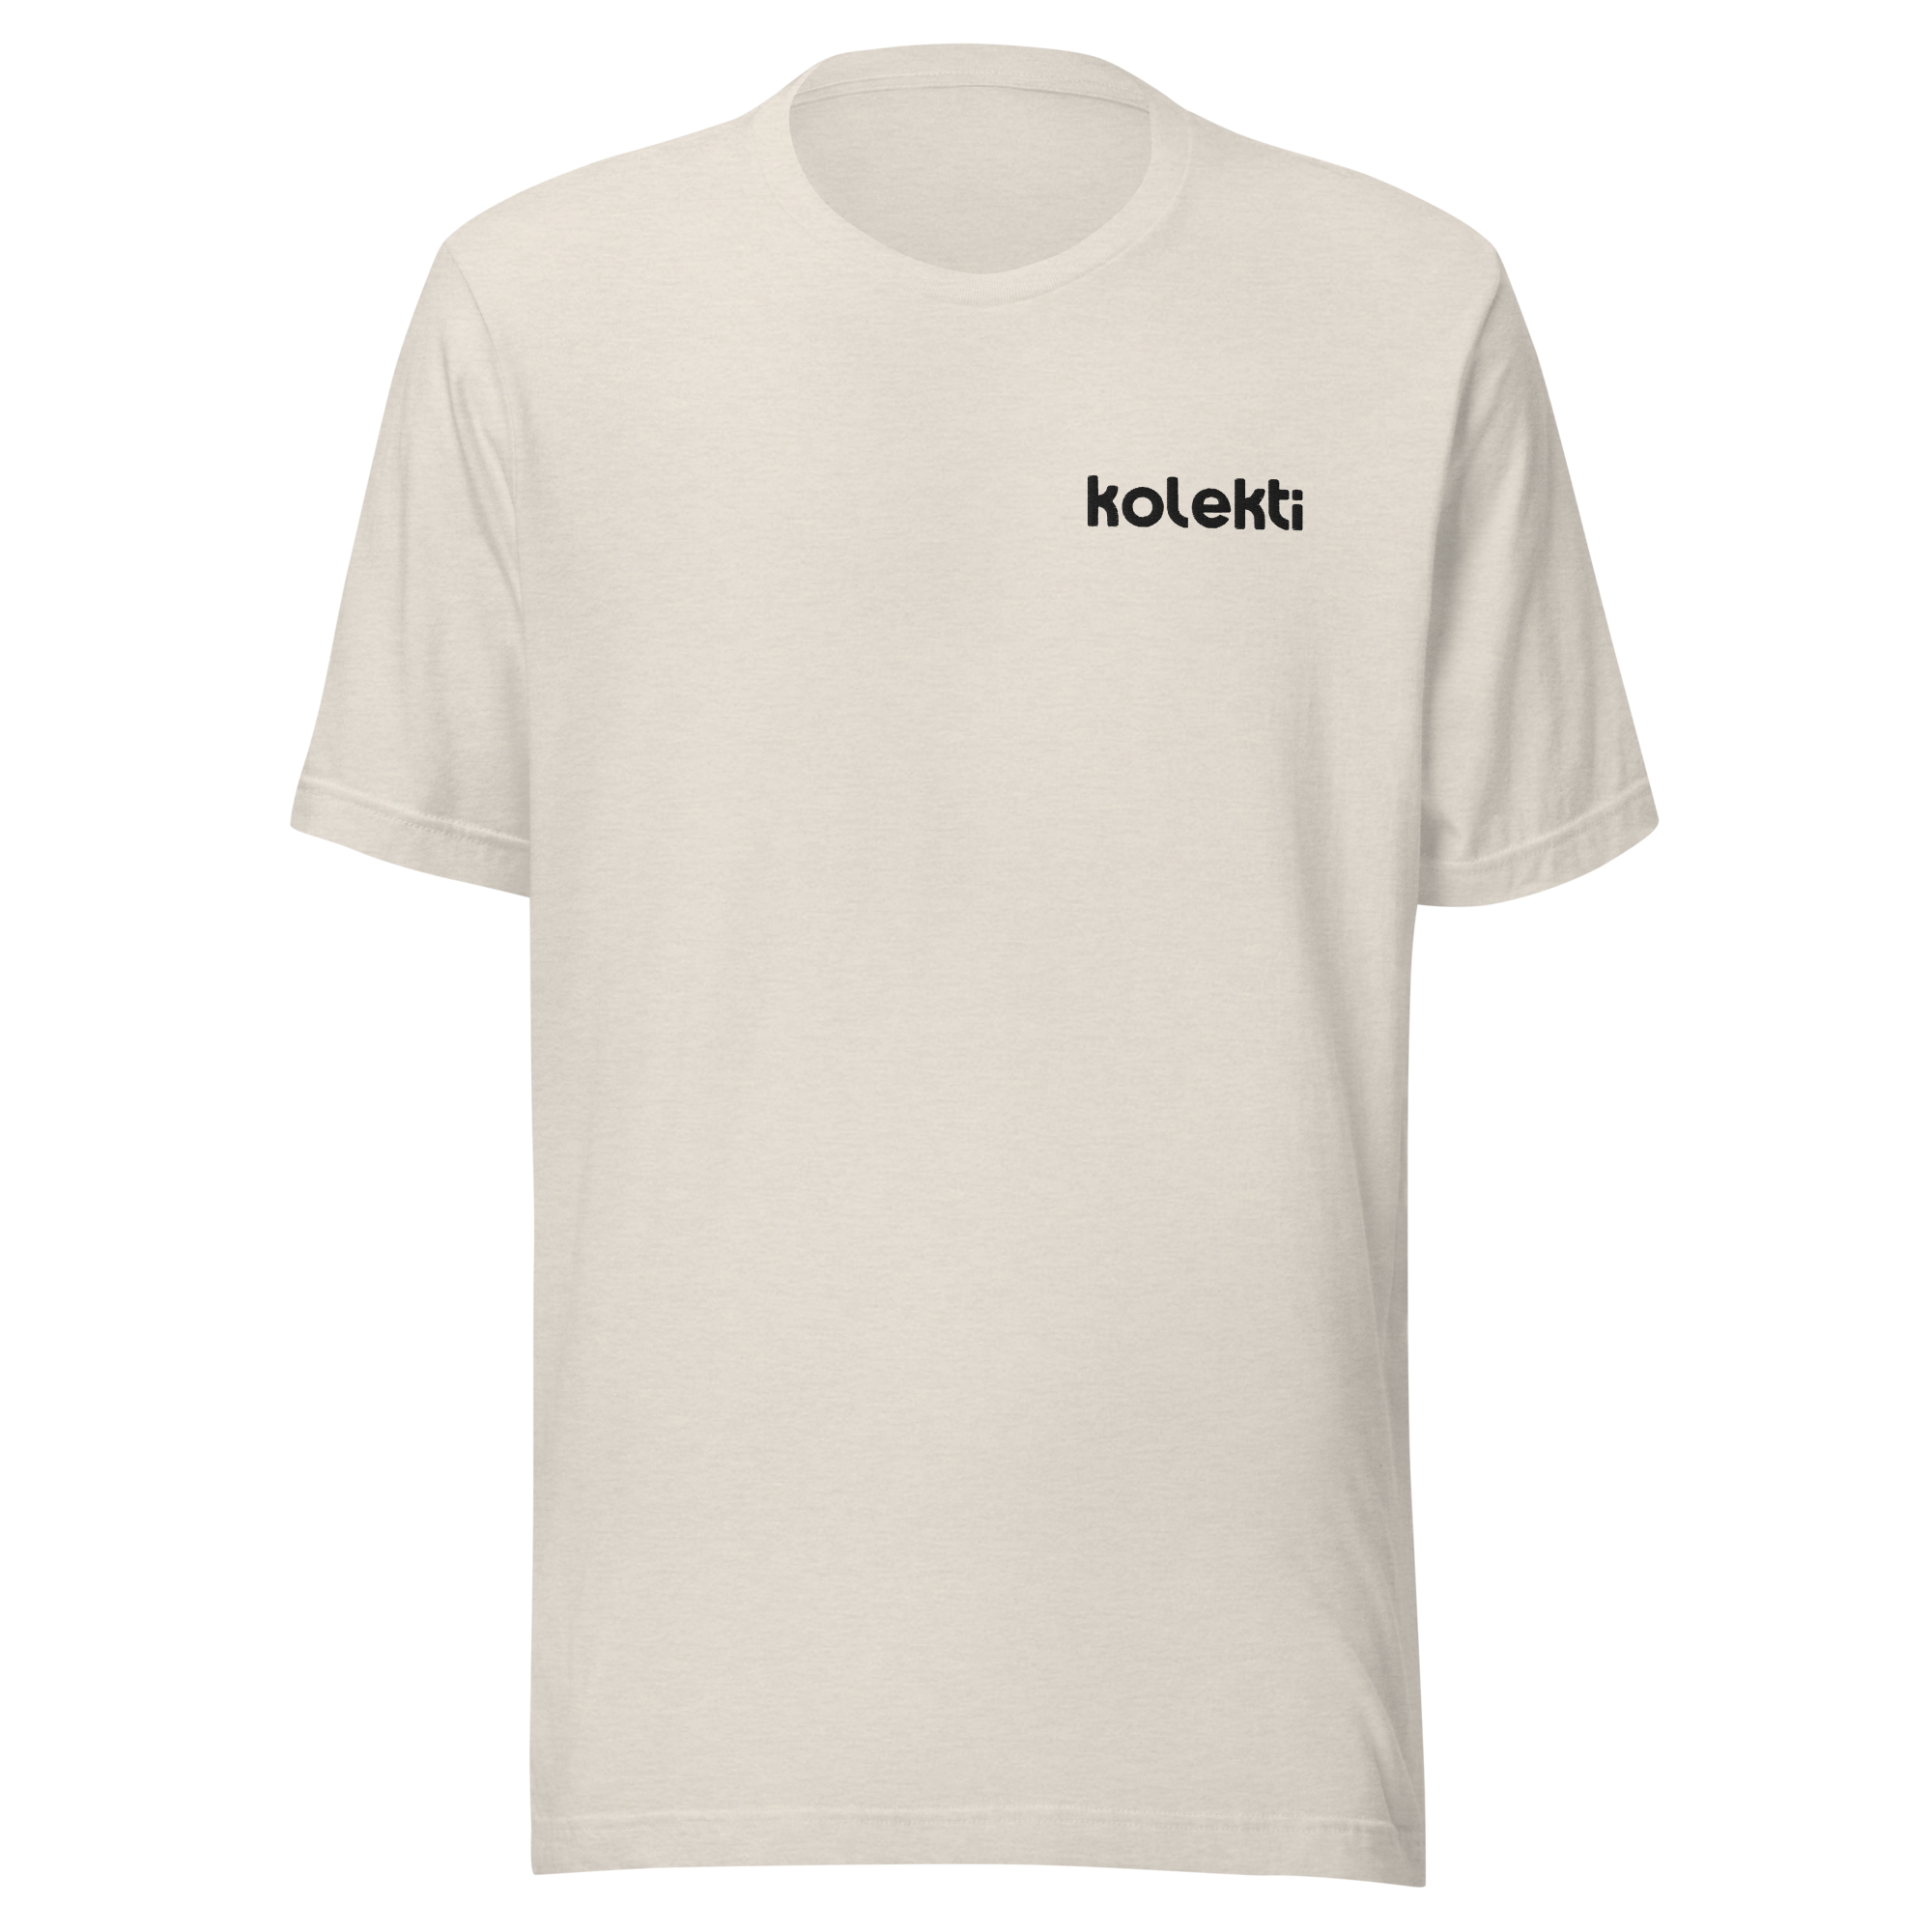 Kolekti - Embroidered Unisex T-shirt (dark logo)